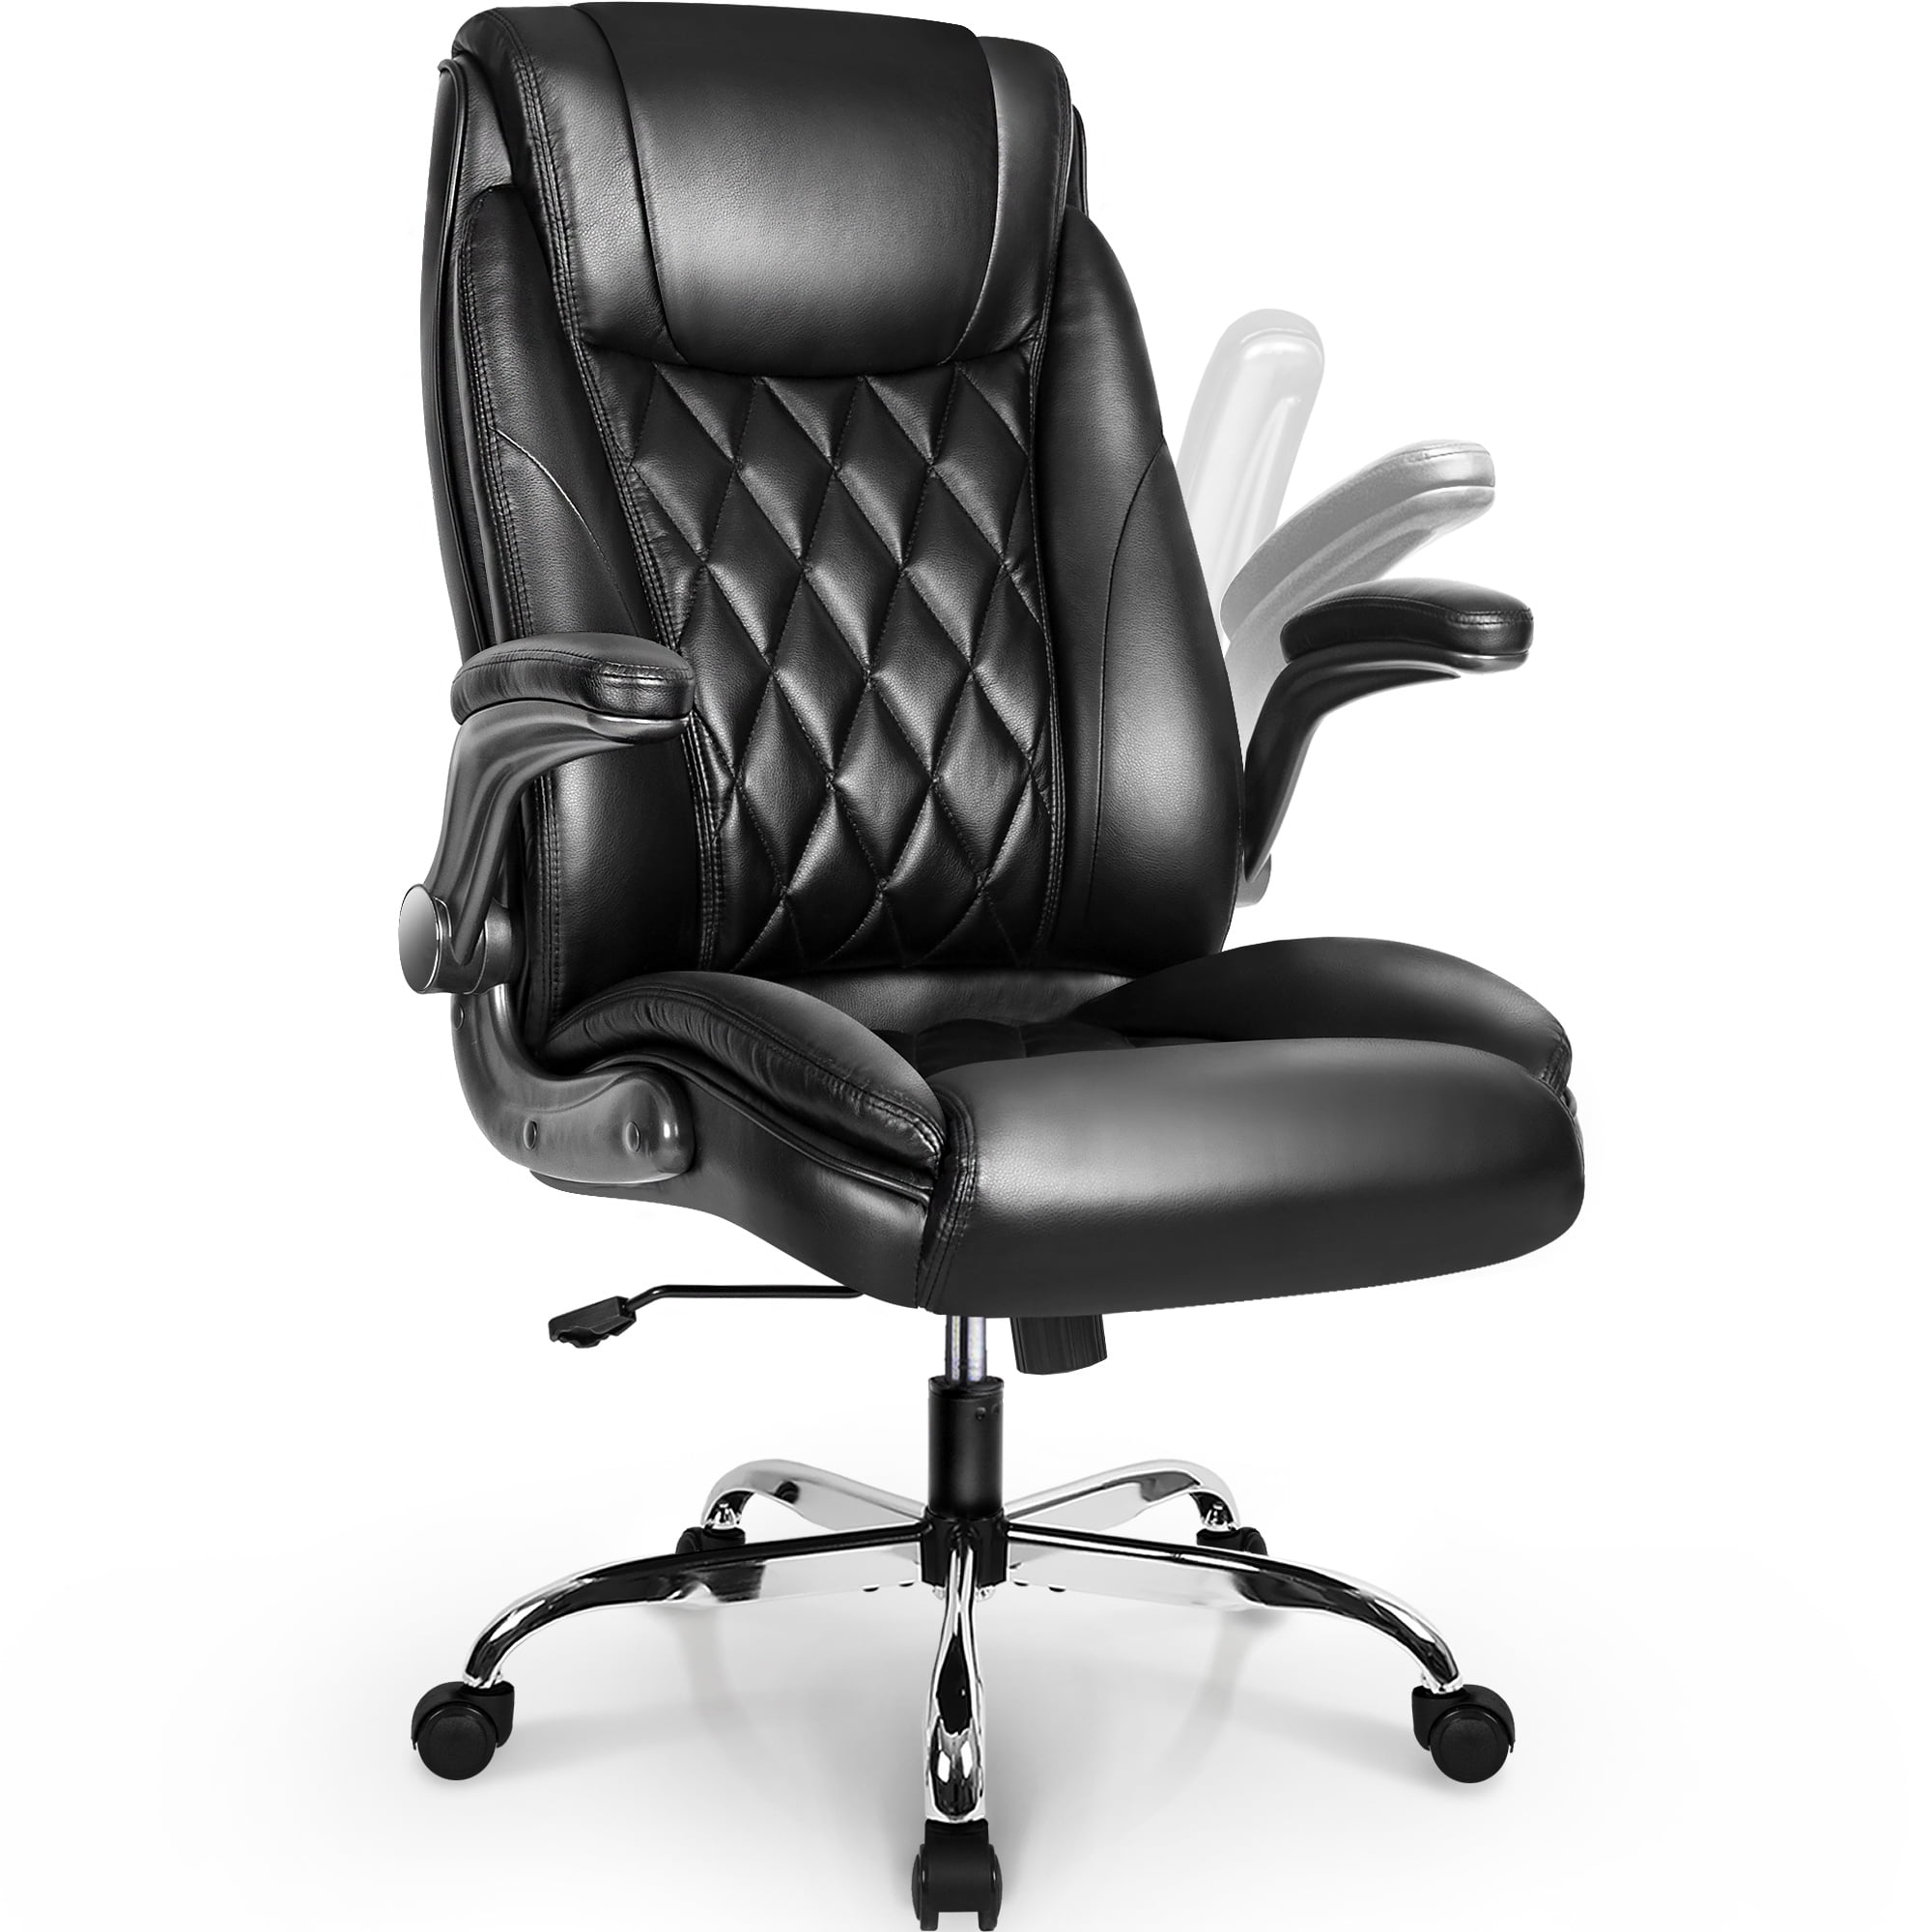 Executive Computer Desk Chair High Back Ergonomic Swivel Office Chair BK 